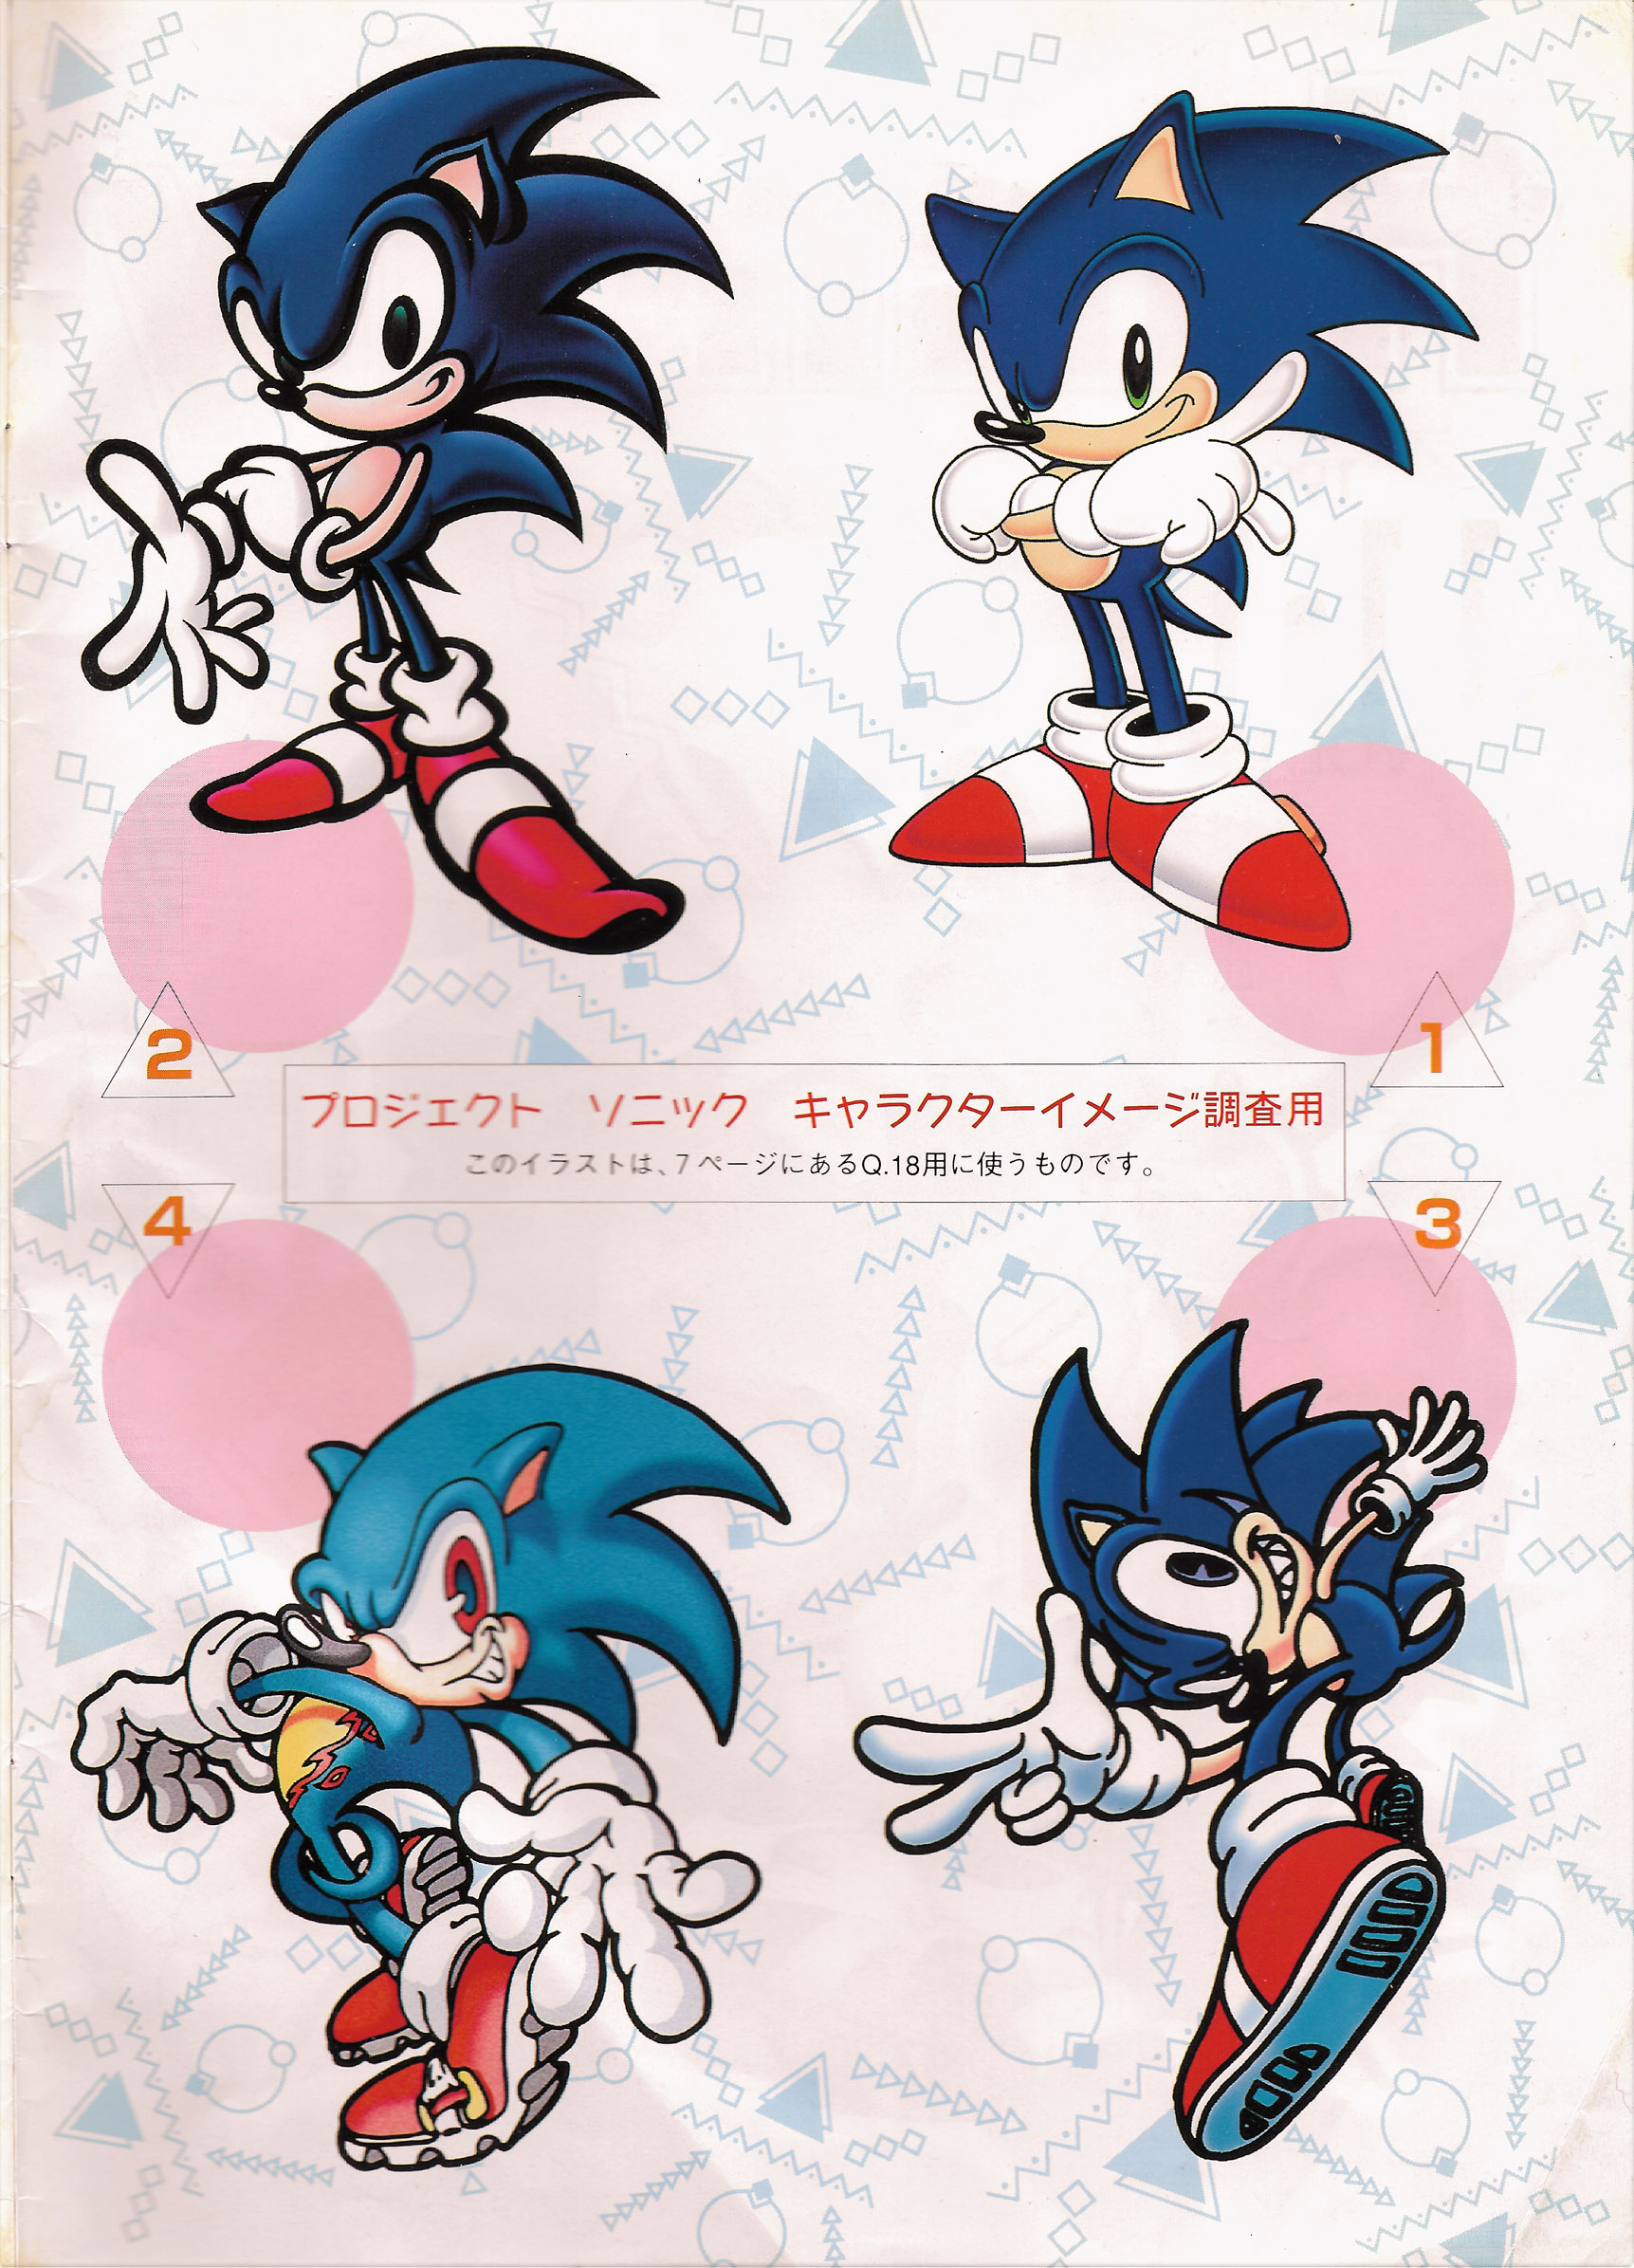 Sonic Adventure, Sonic Wiki Zone